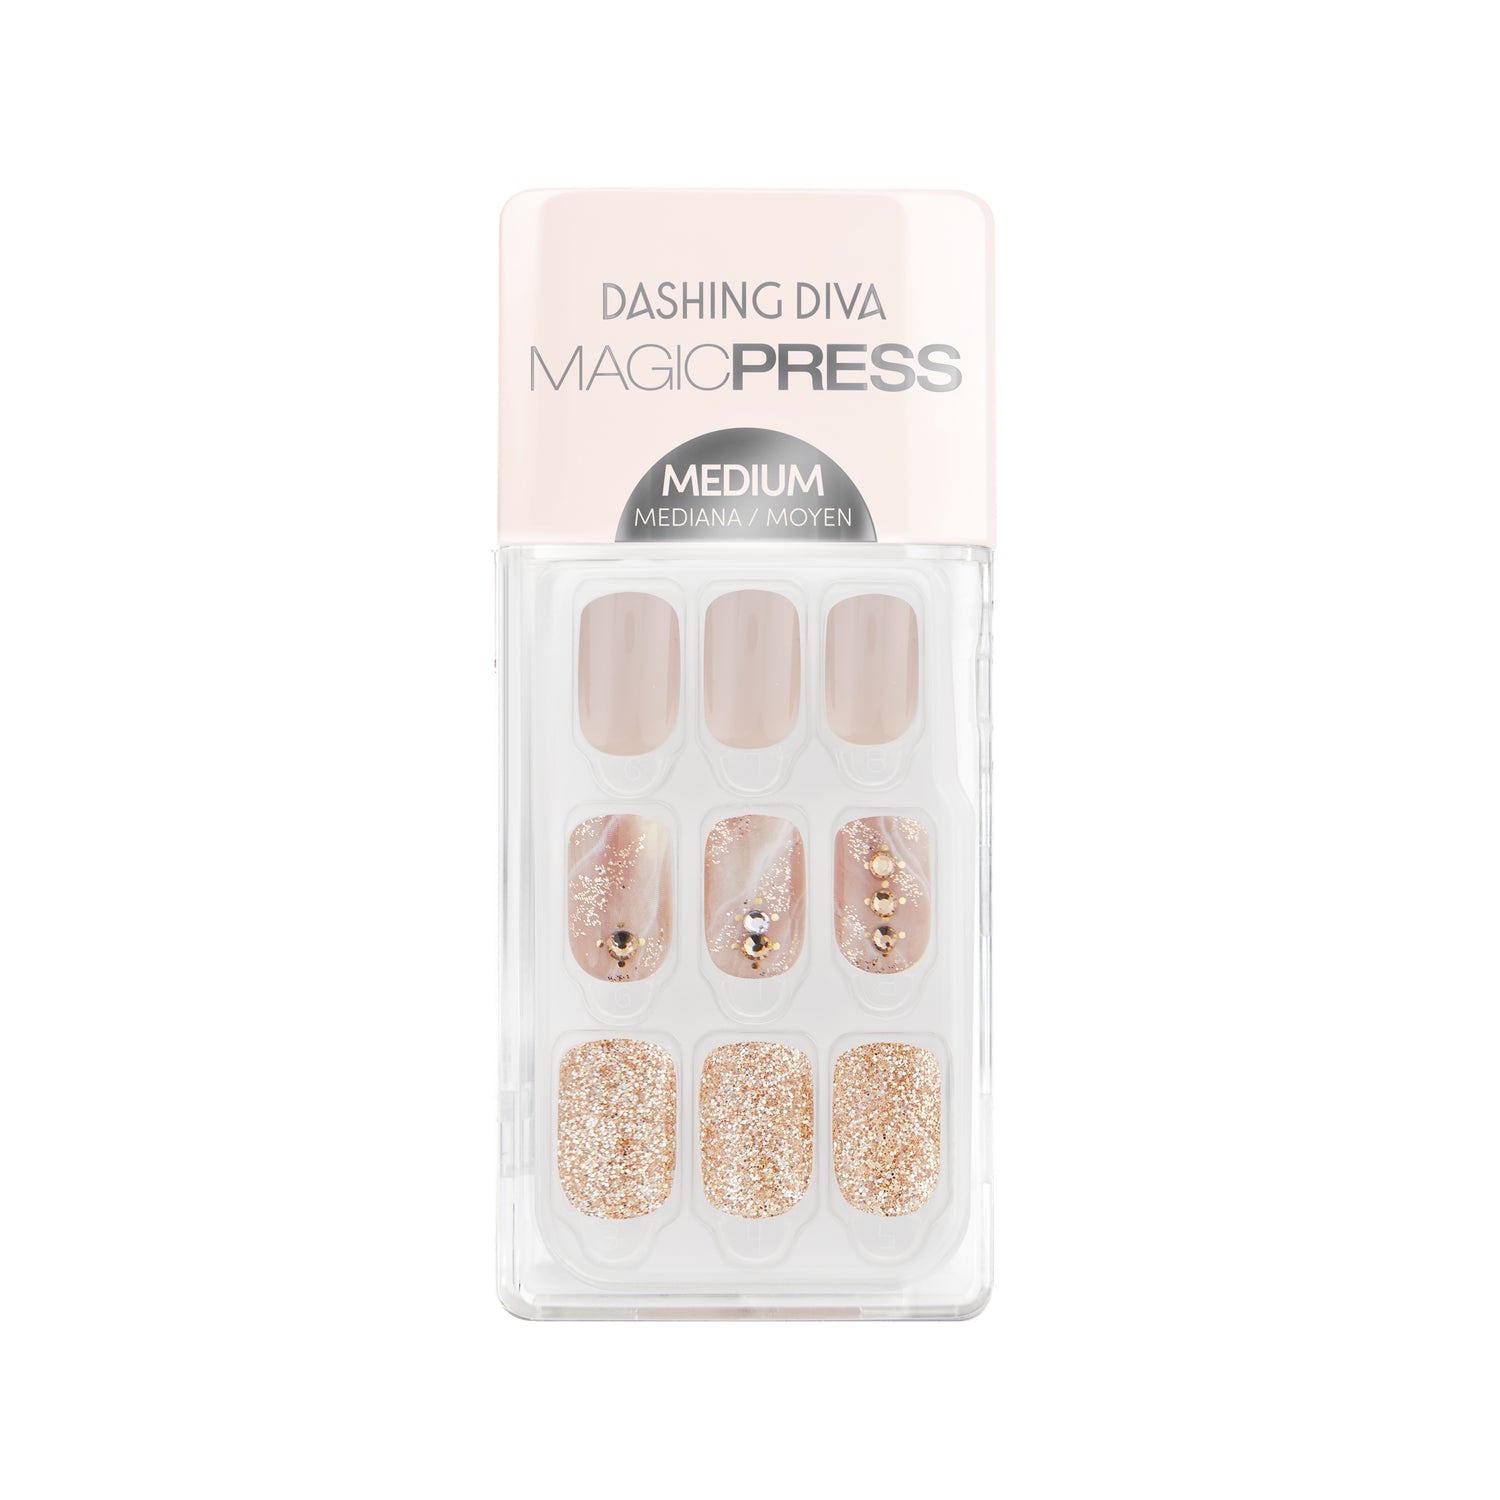 Dashing Diva MAGIC PRESS medium, square neutral press on gel nails with rhinestone and gold glitter accents.